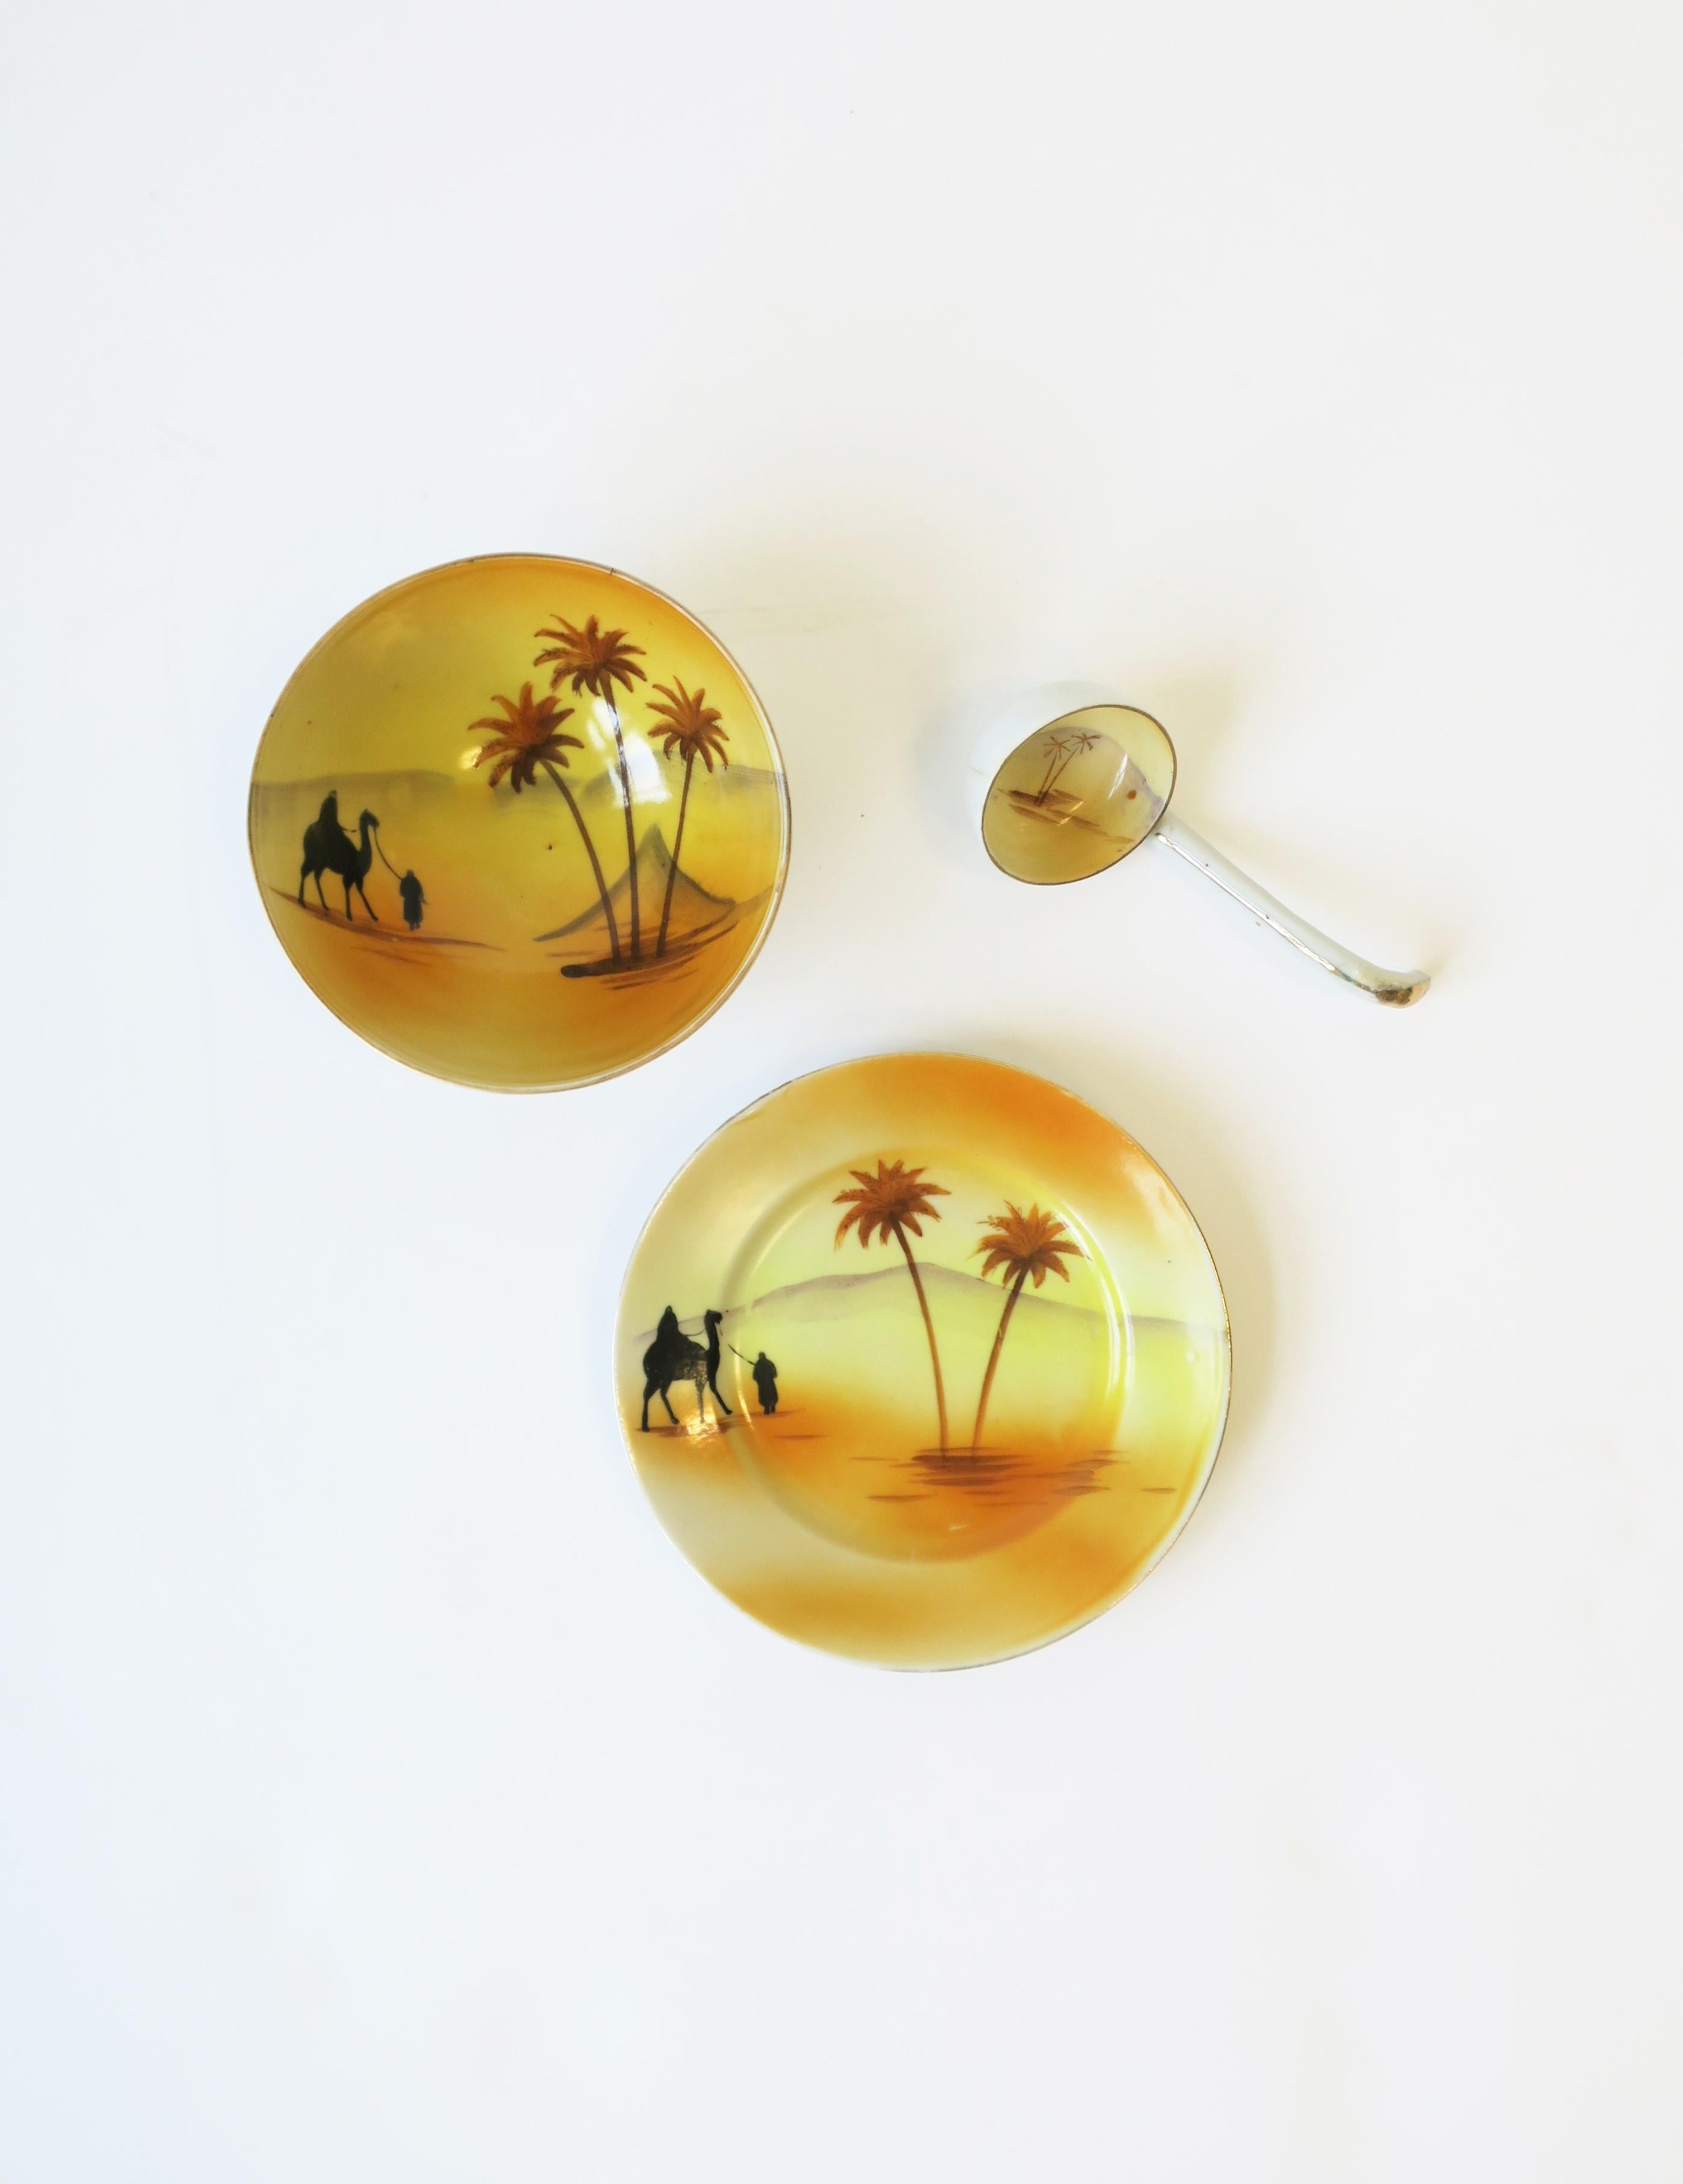 Japanese Porcelain Desert Palm Serving Set with Ladle Spoon For Sale